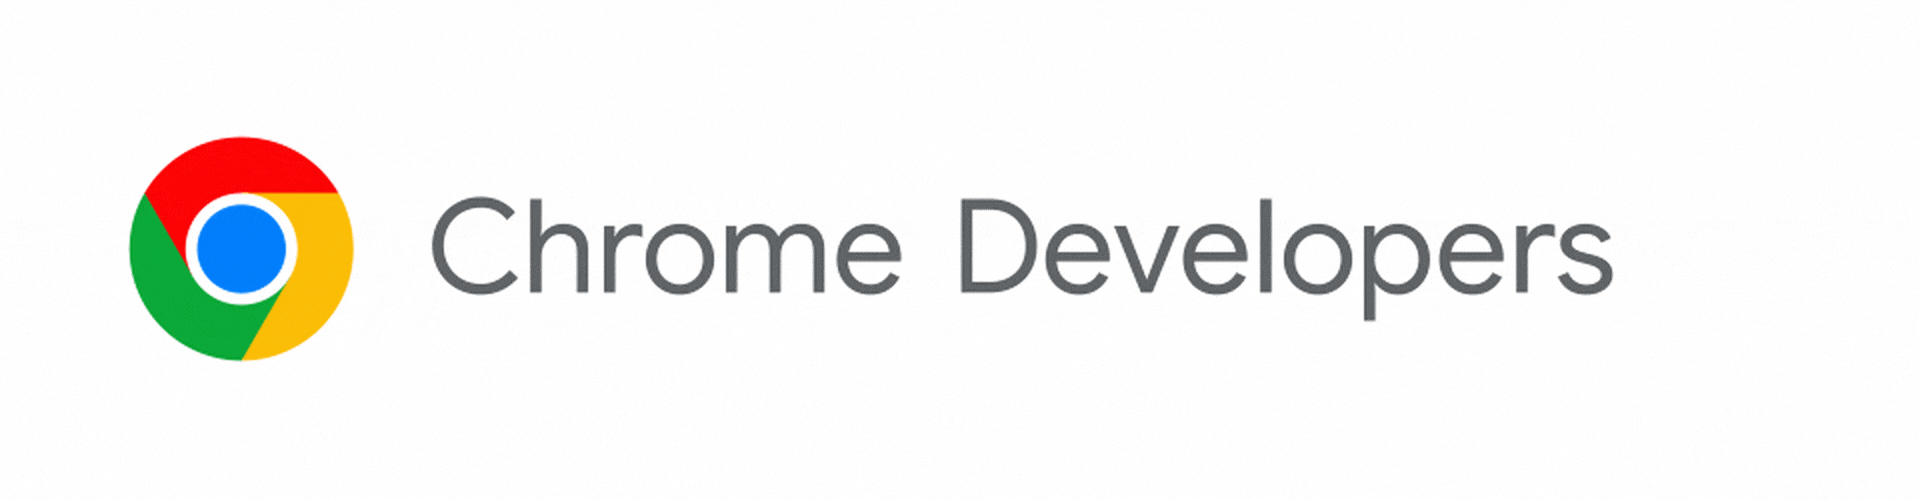 El logotipo de Chrome Developers se transforma en Chrome for Developers.